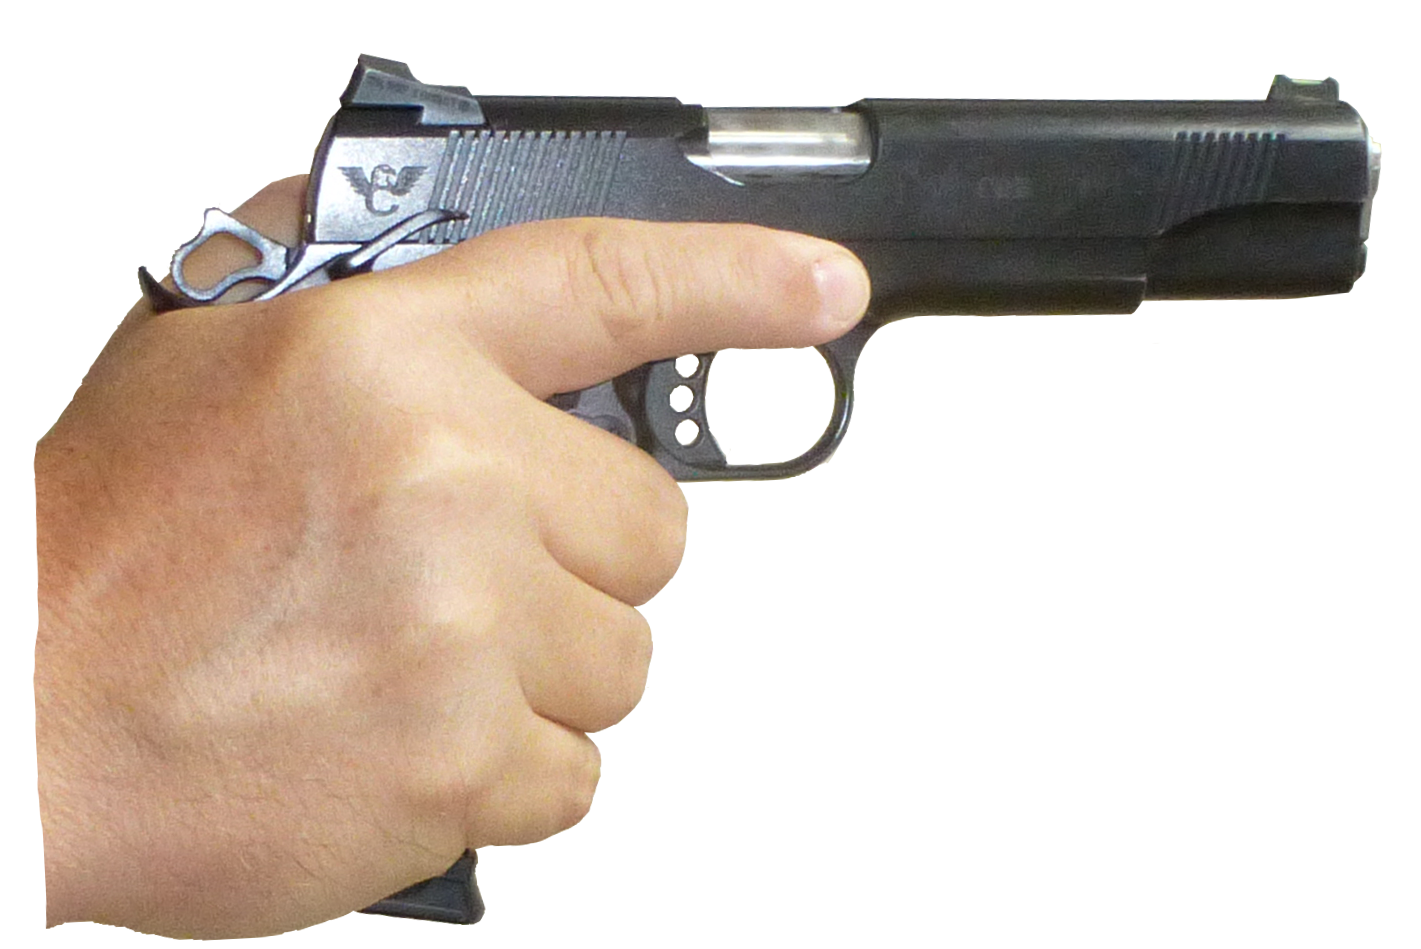 Download Gun In Hand Image HQ PNG Image | FreePNGImg